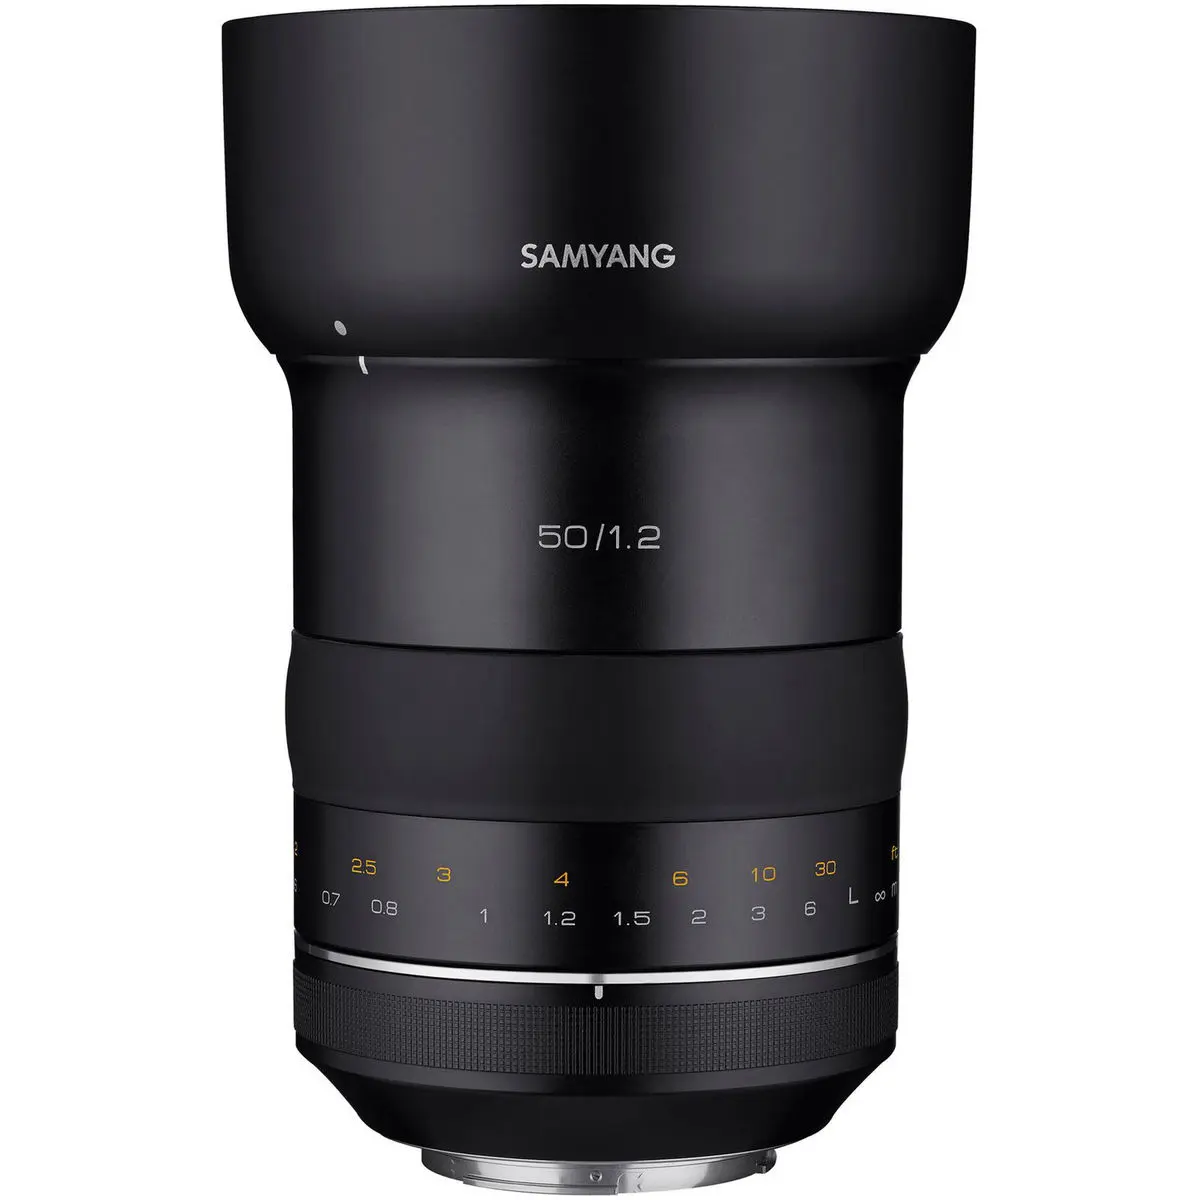 1. Samyang XP 50mm F1.2 (Canon) Lens